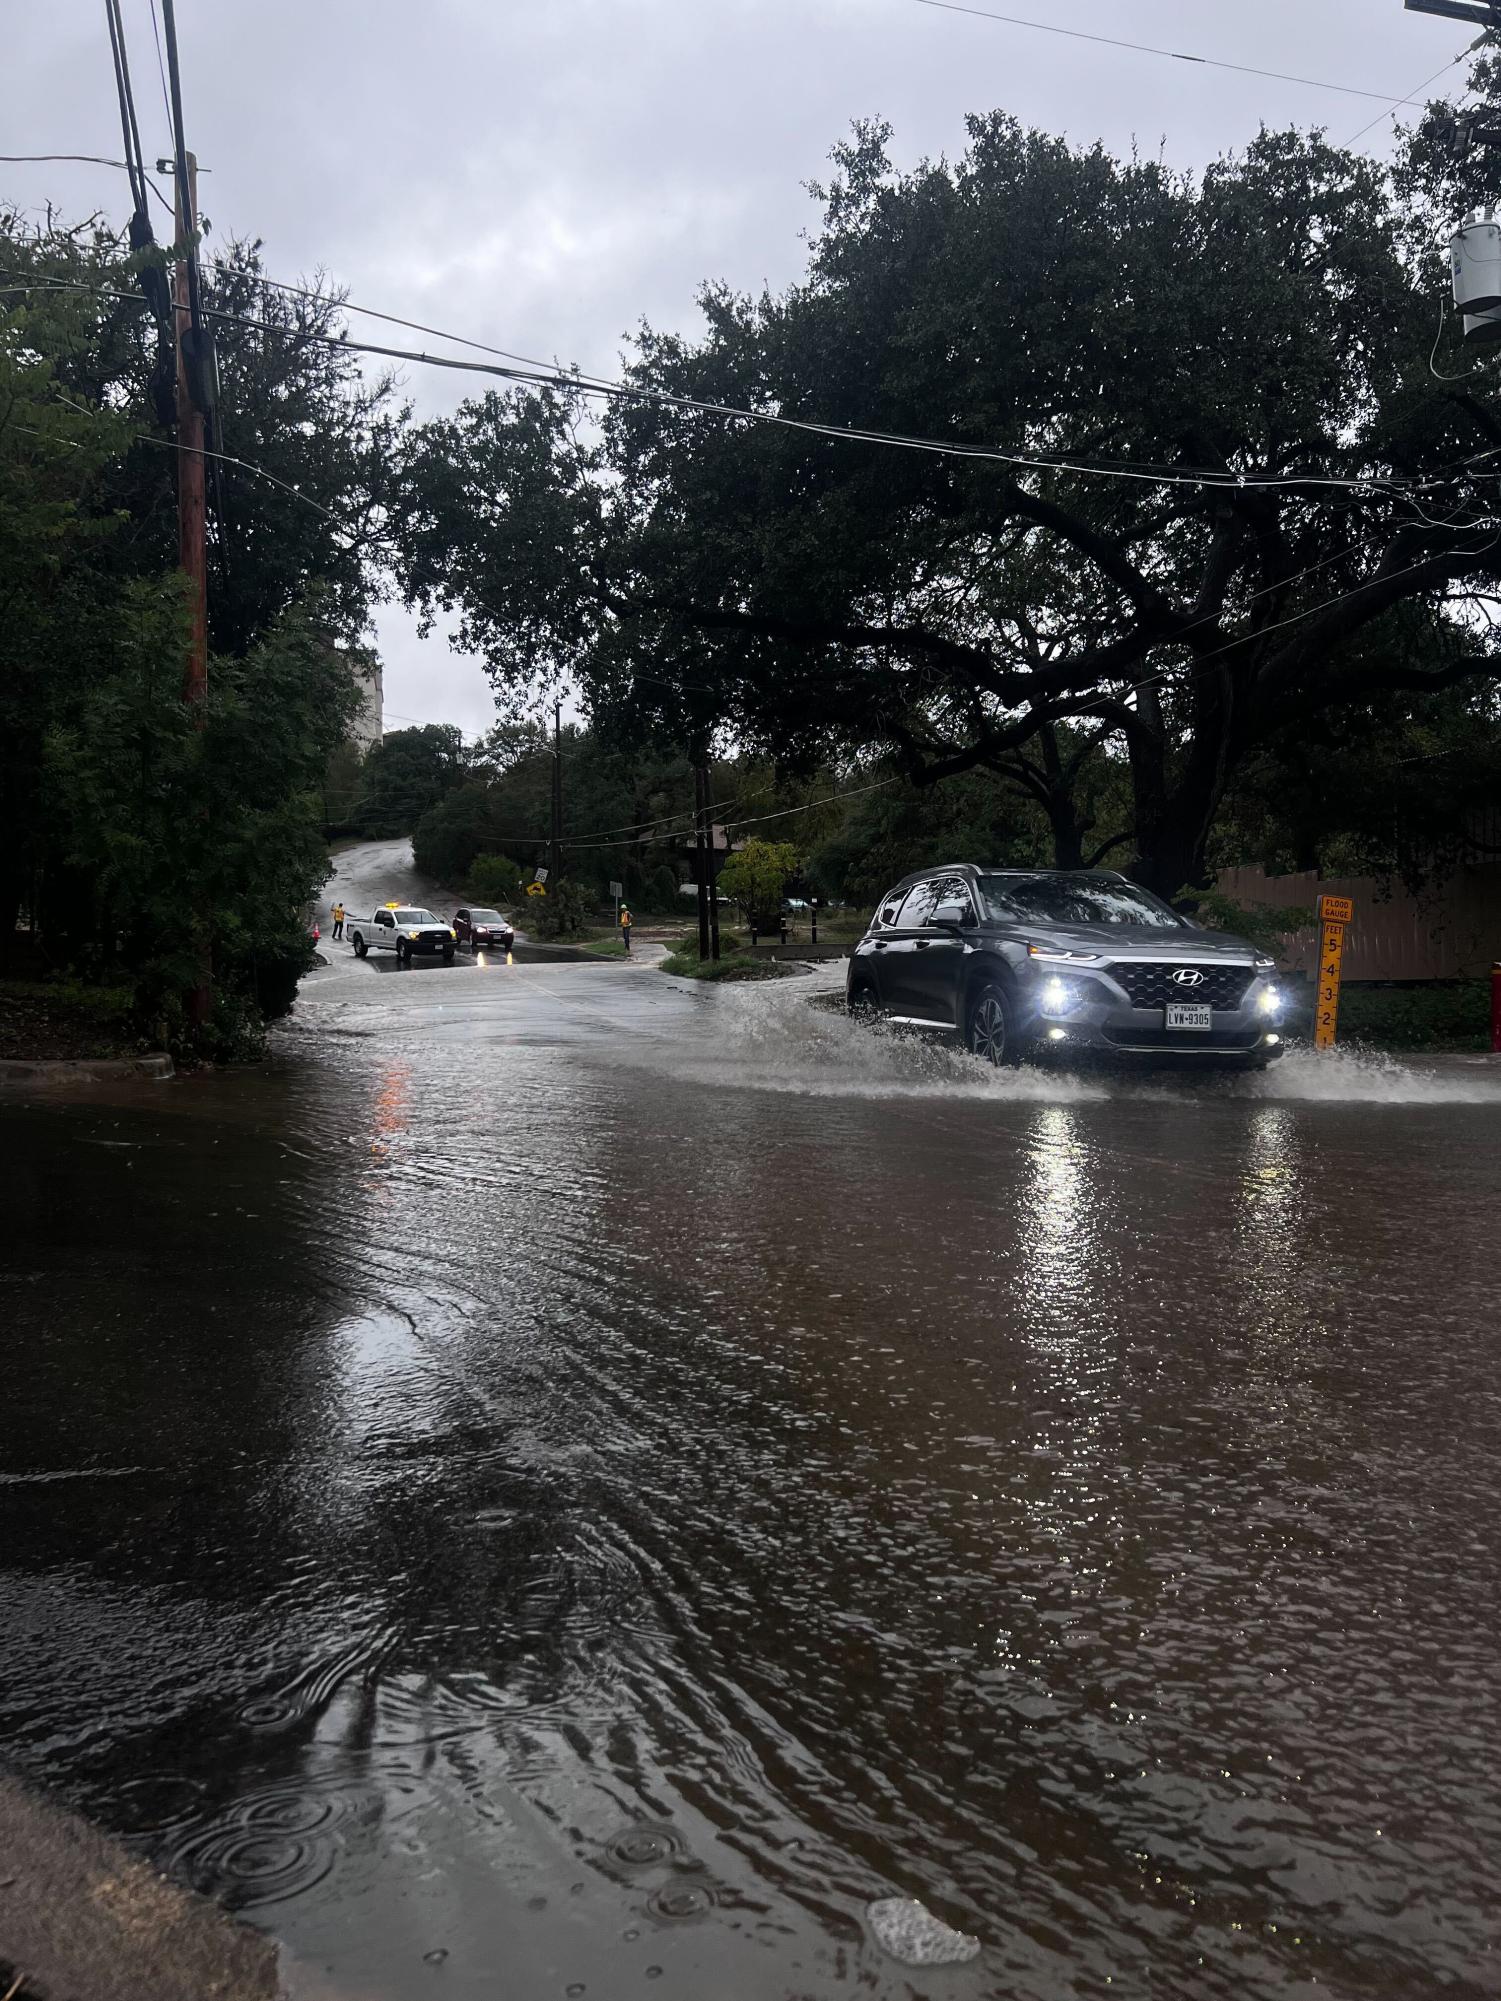 San+Marcos+under+flash+flood+warning